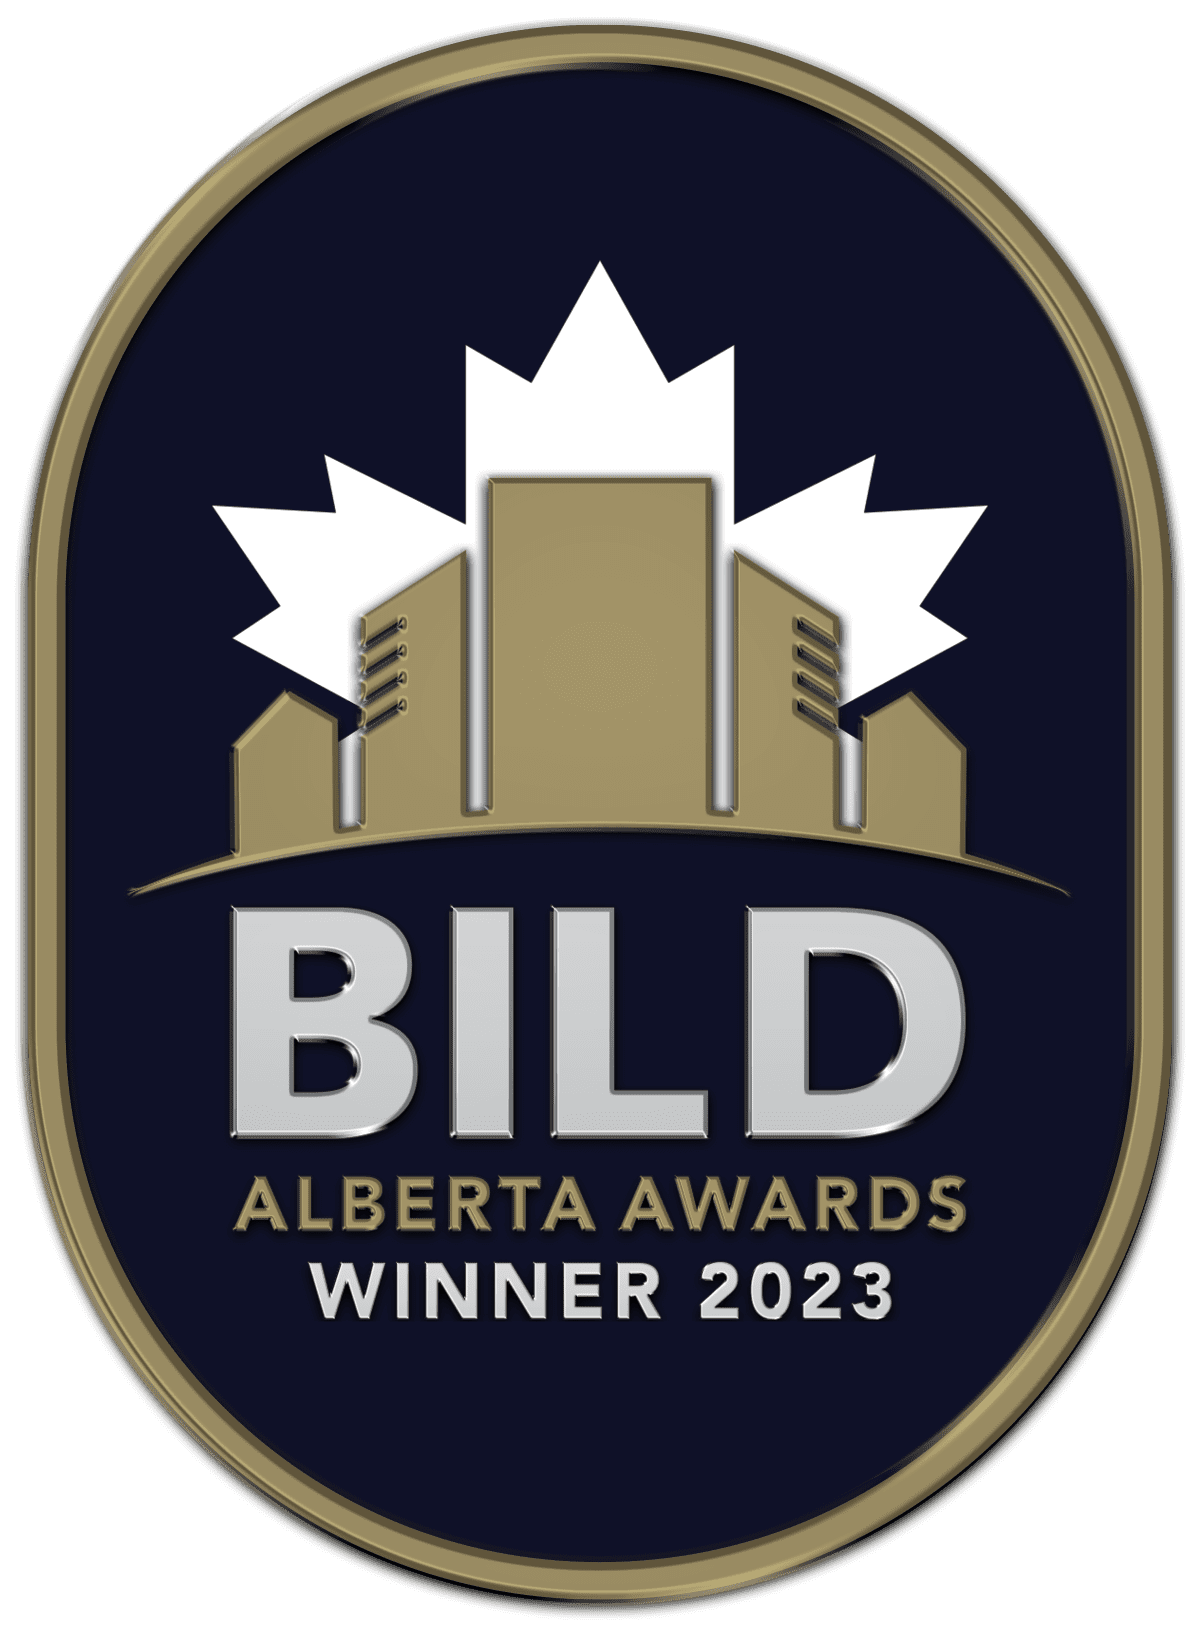 Wentworth - BILD Alberta Awards winner 2023.